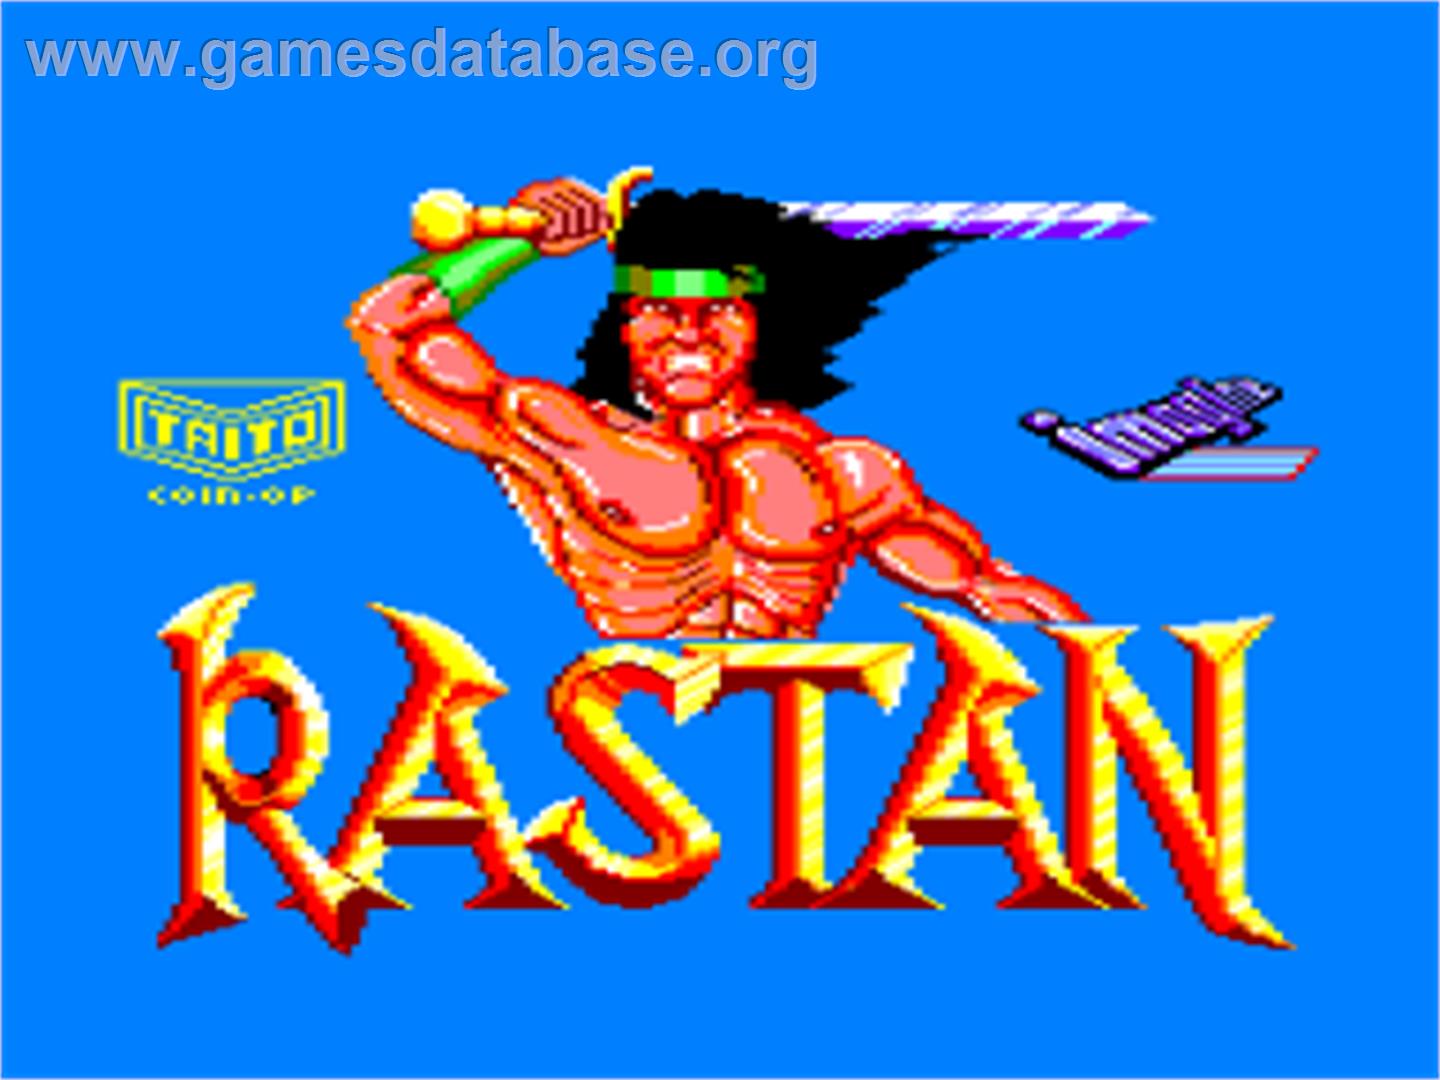 Rastan Saga - Amstrad CPC - Artwork - Title Screen